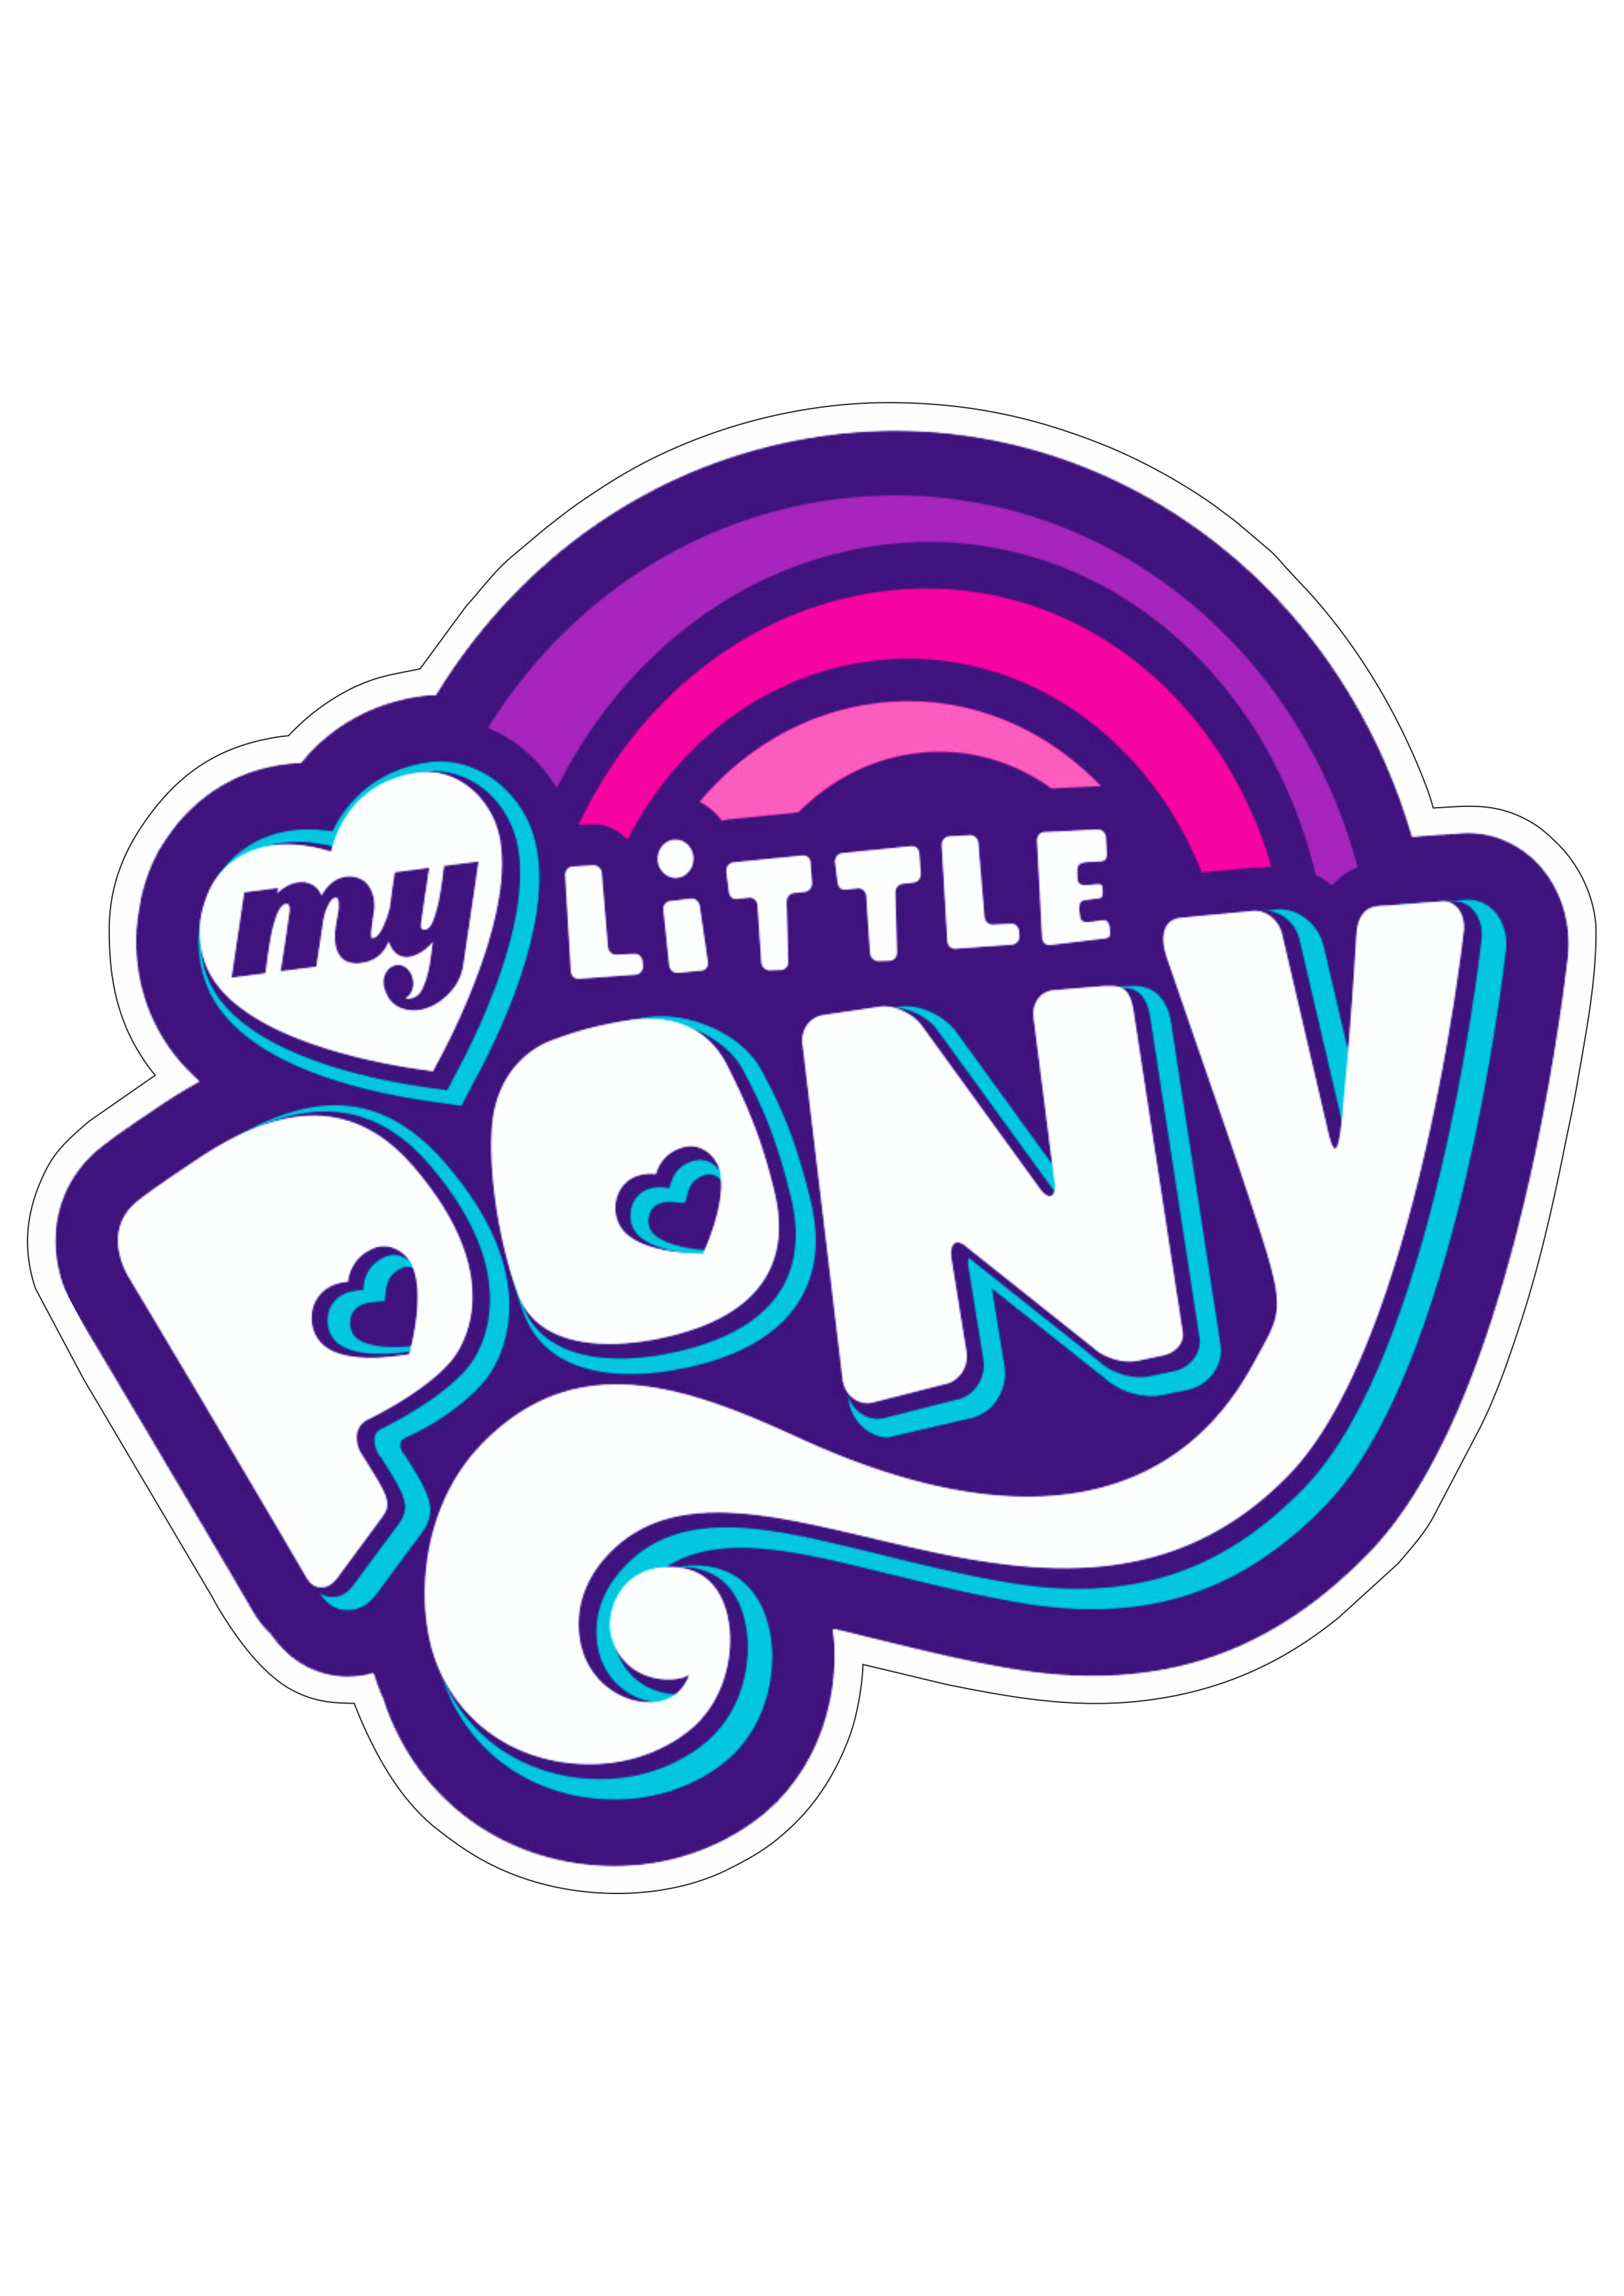 My little pony logo imagem imagem sem fundo vetor png